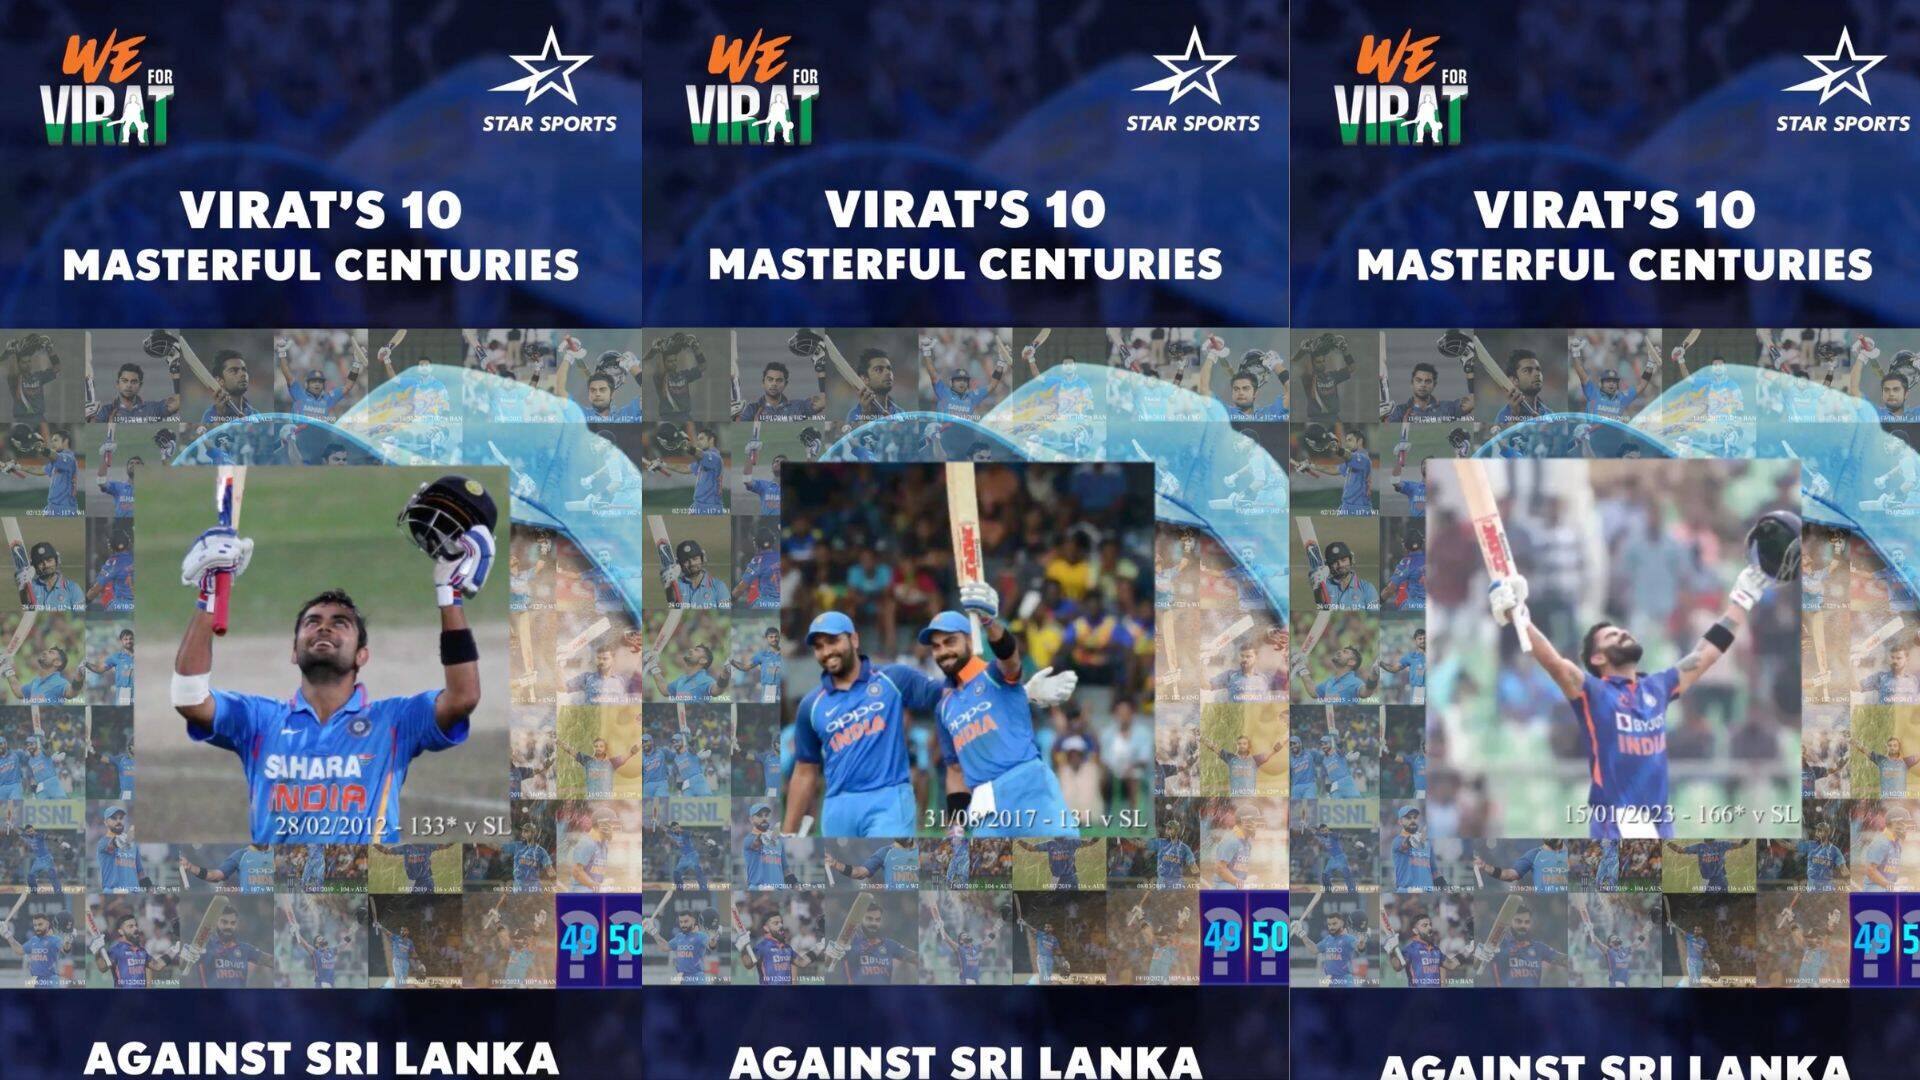 Star Sports Releases Tiktok-Styled Edit Video For Virat Kohli Ahead Of IND-SL